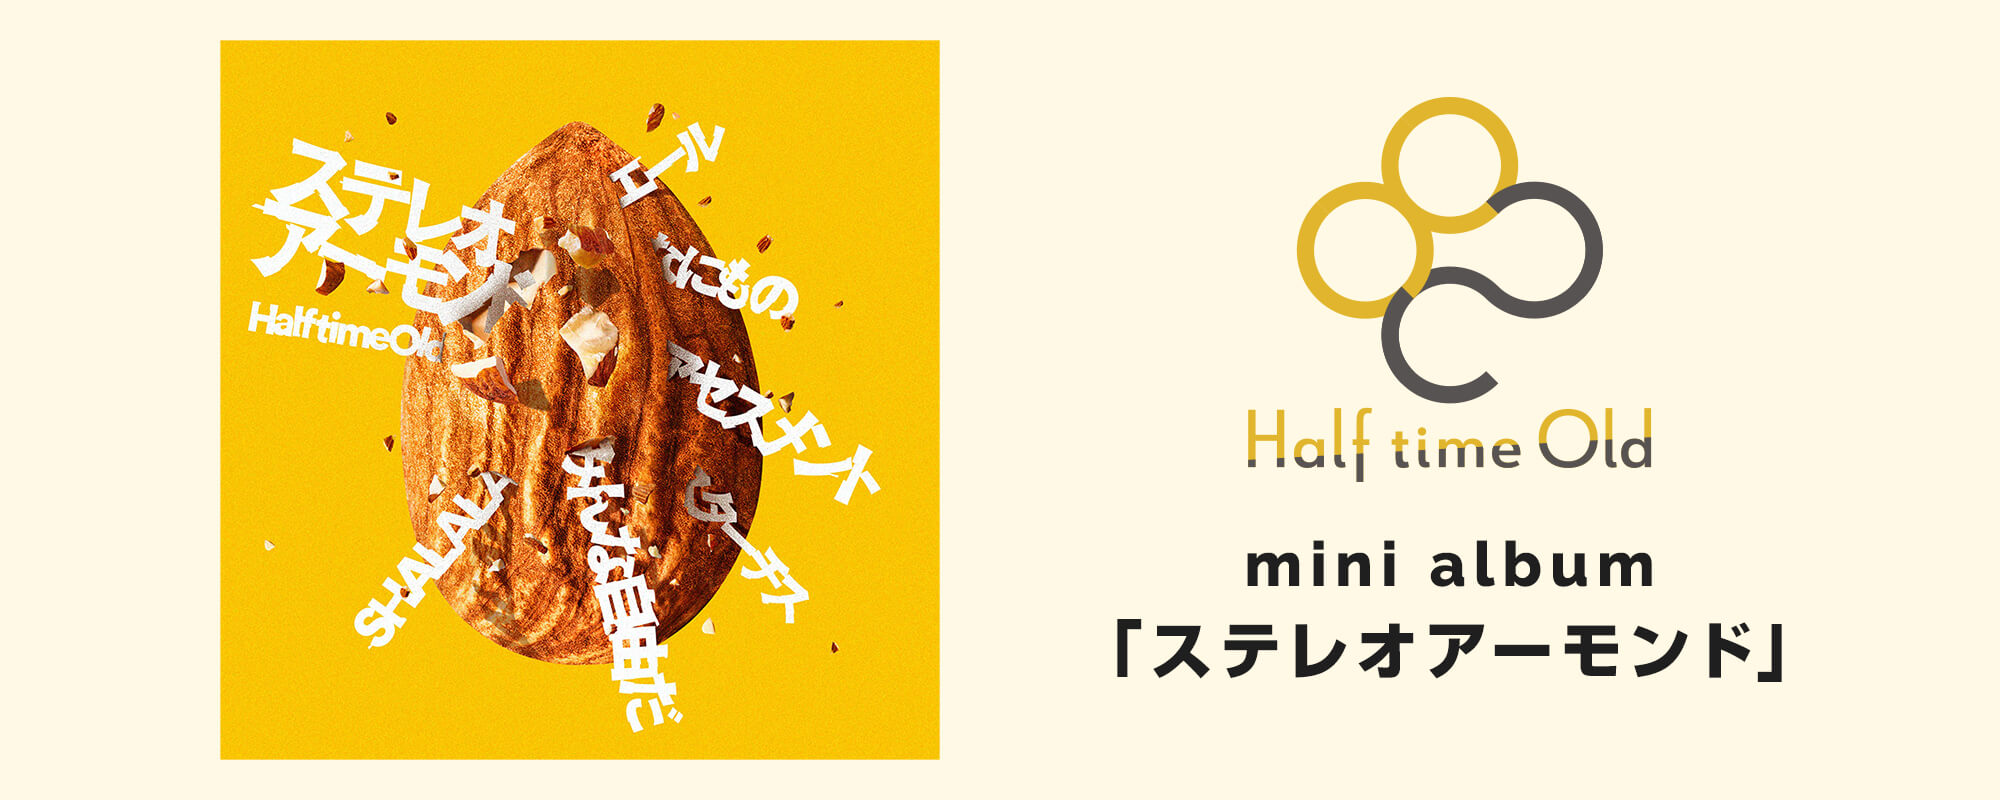 Half time Old mini album「ステレオアーモンド」